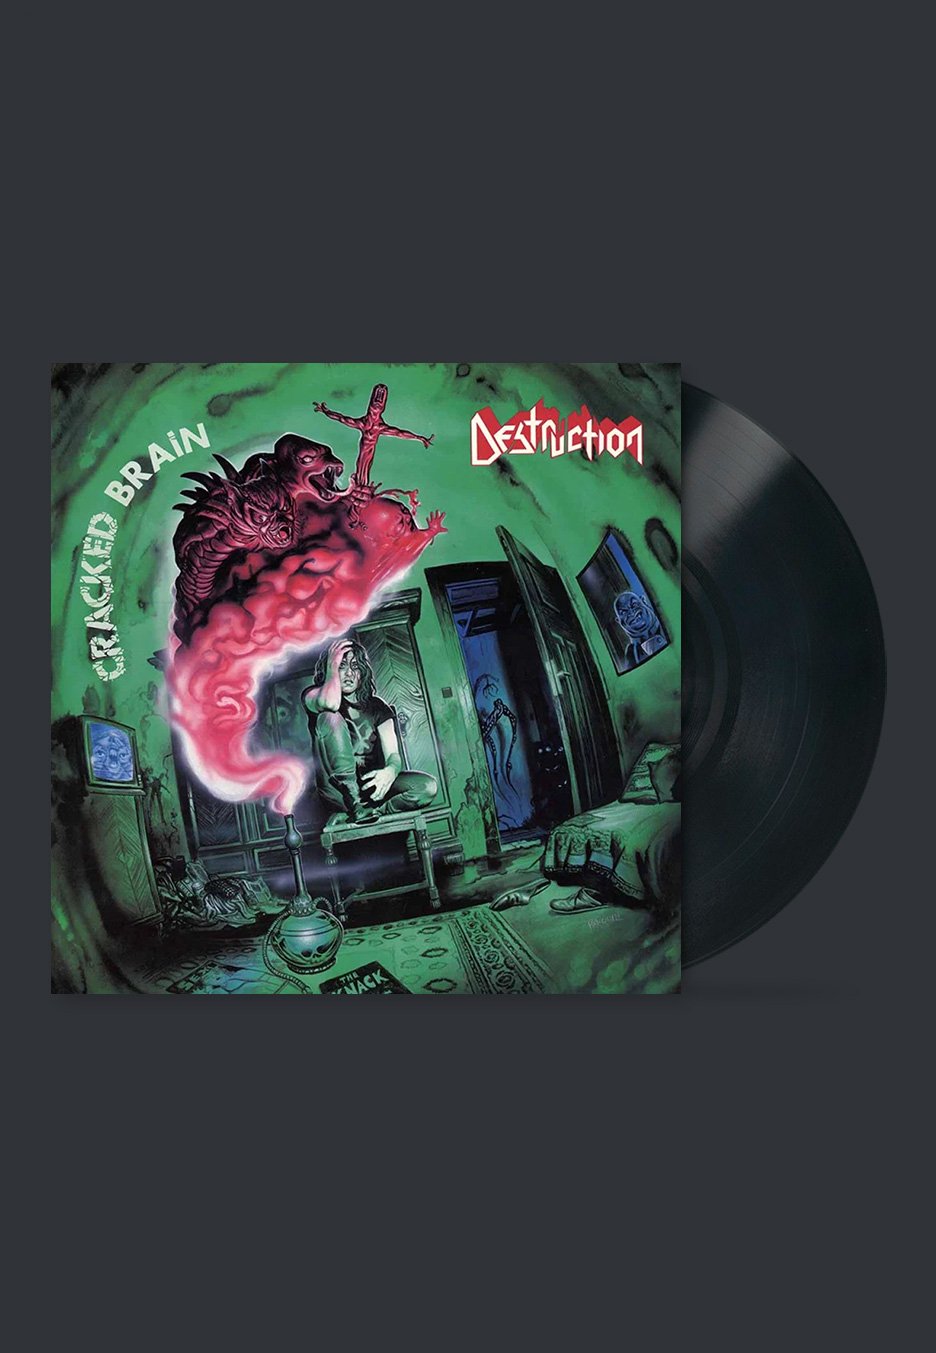 Destruction - Cracked Brain Ltd. - Vinyl